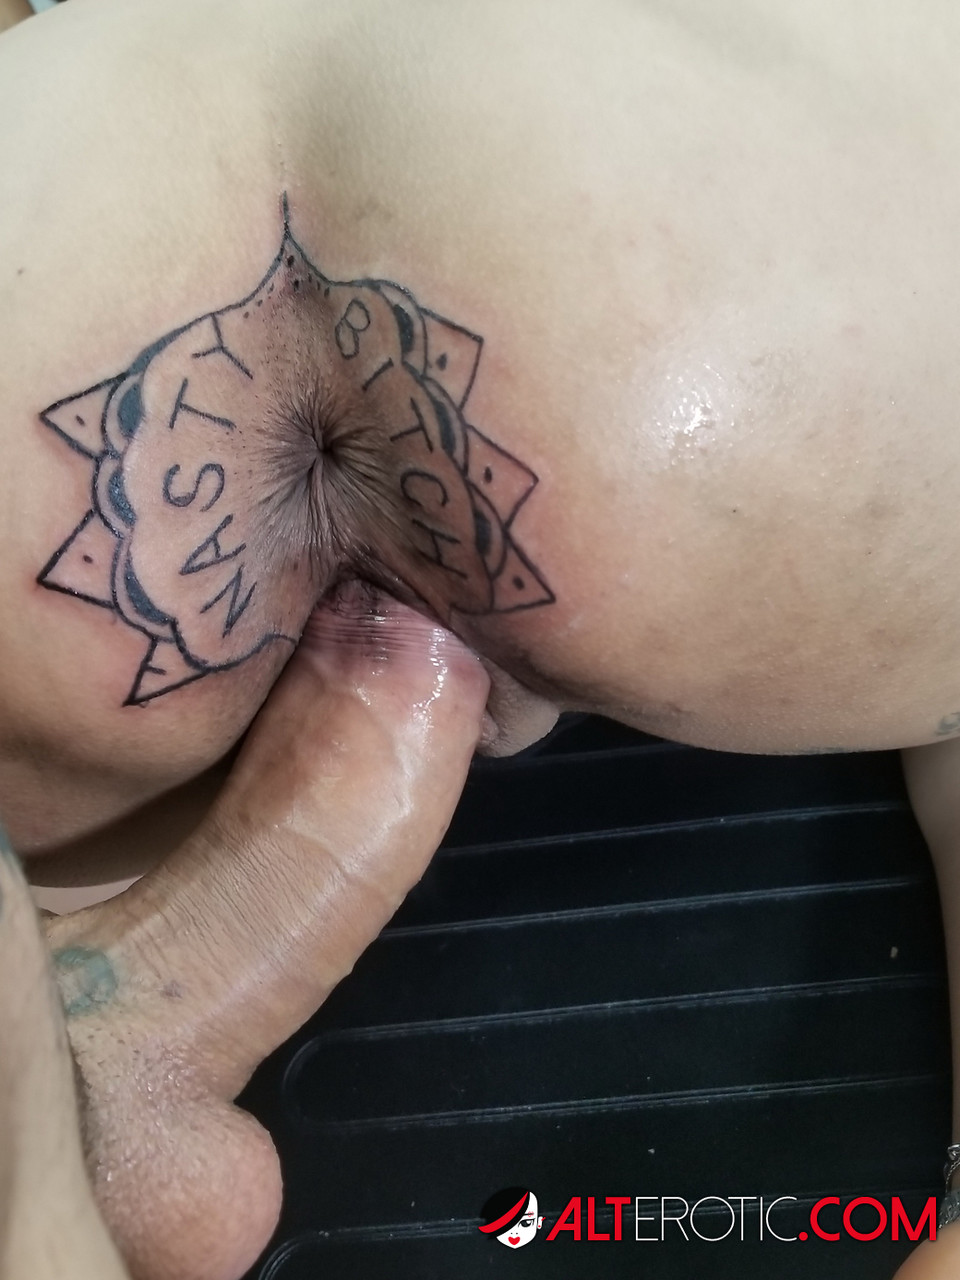 Latina chick Kitty Jaguar gets a butt tattoo before being fucked 色情照片 #424168461 | Alt Erotic Pics, Kitty Jaguar, Tattoo, 手机色情